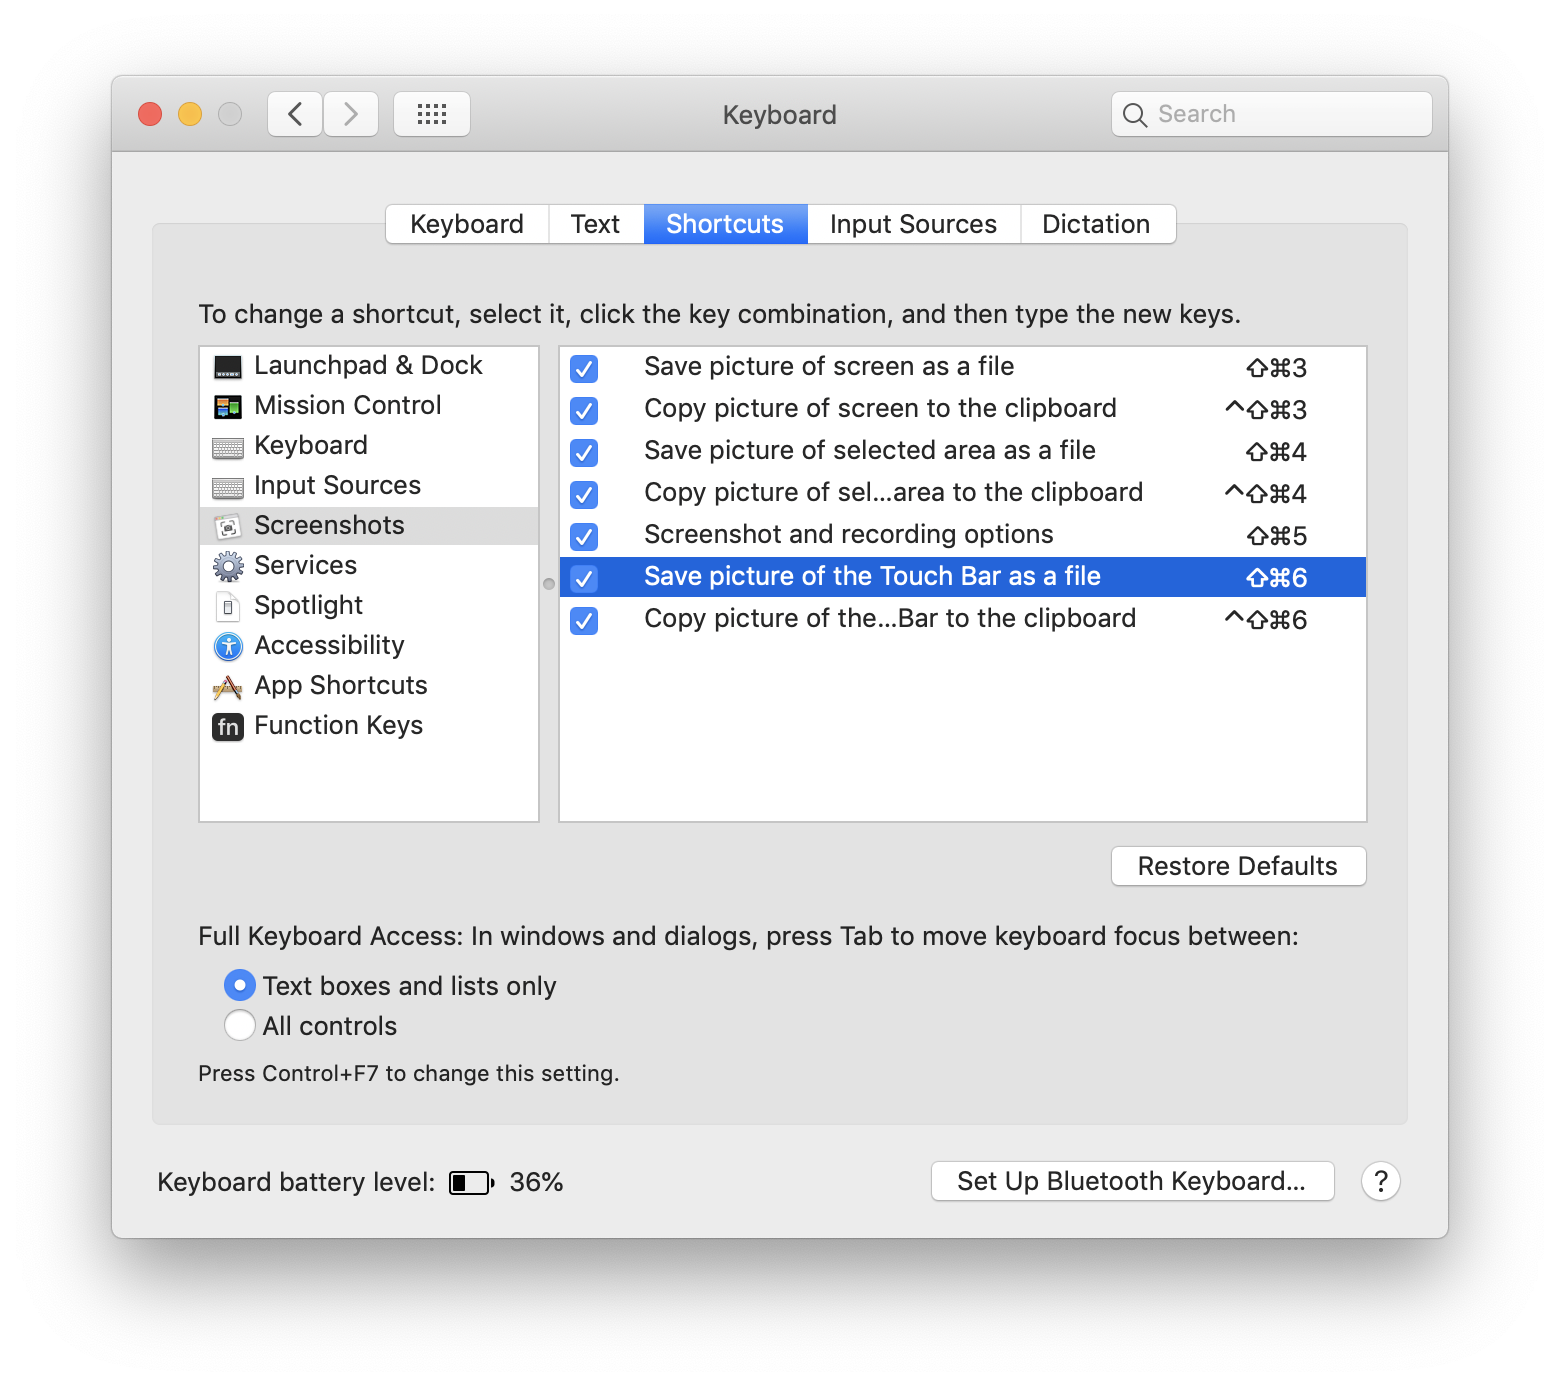 screen snip shortcut mac